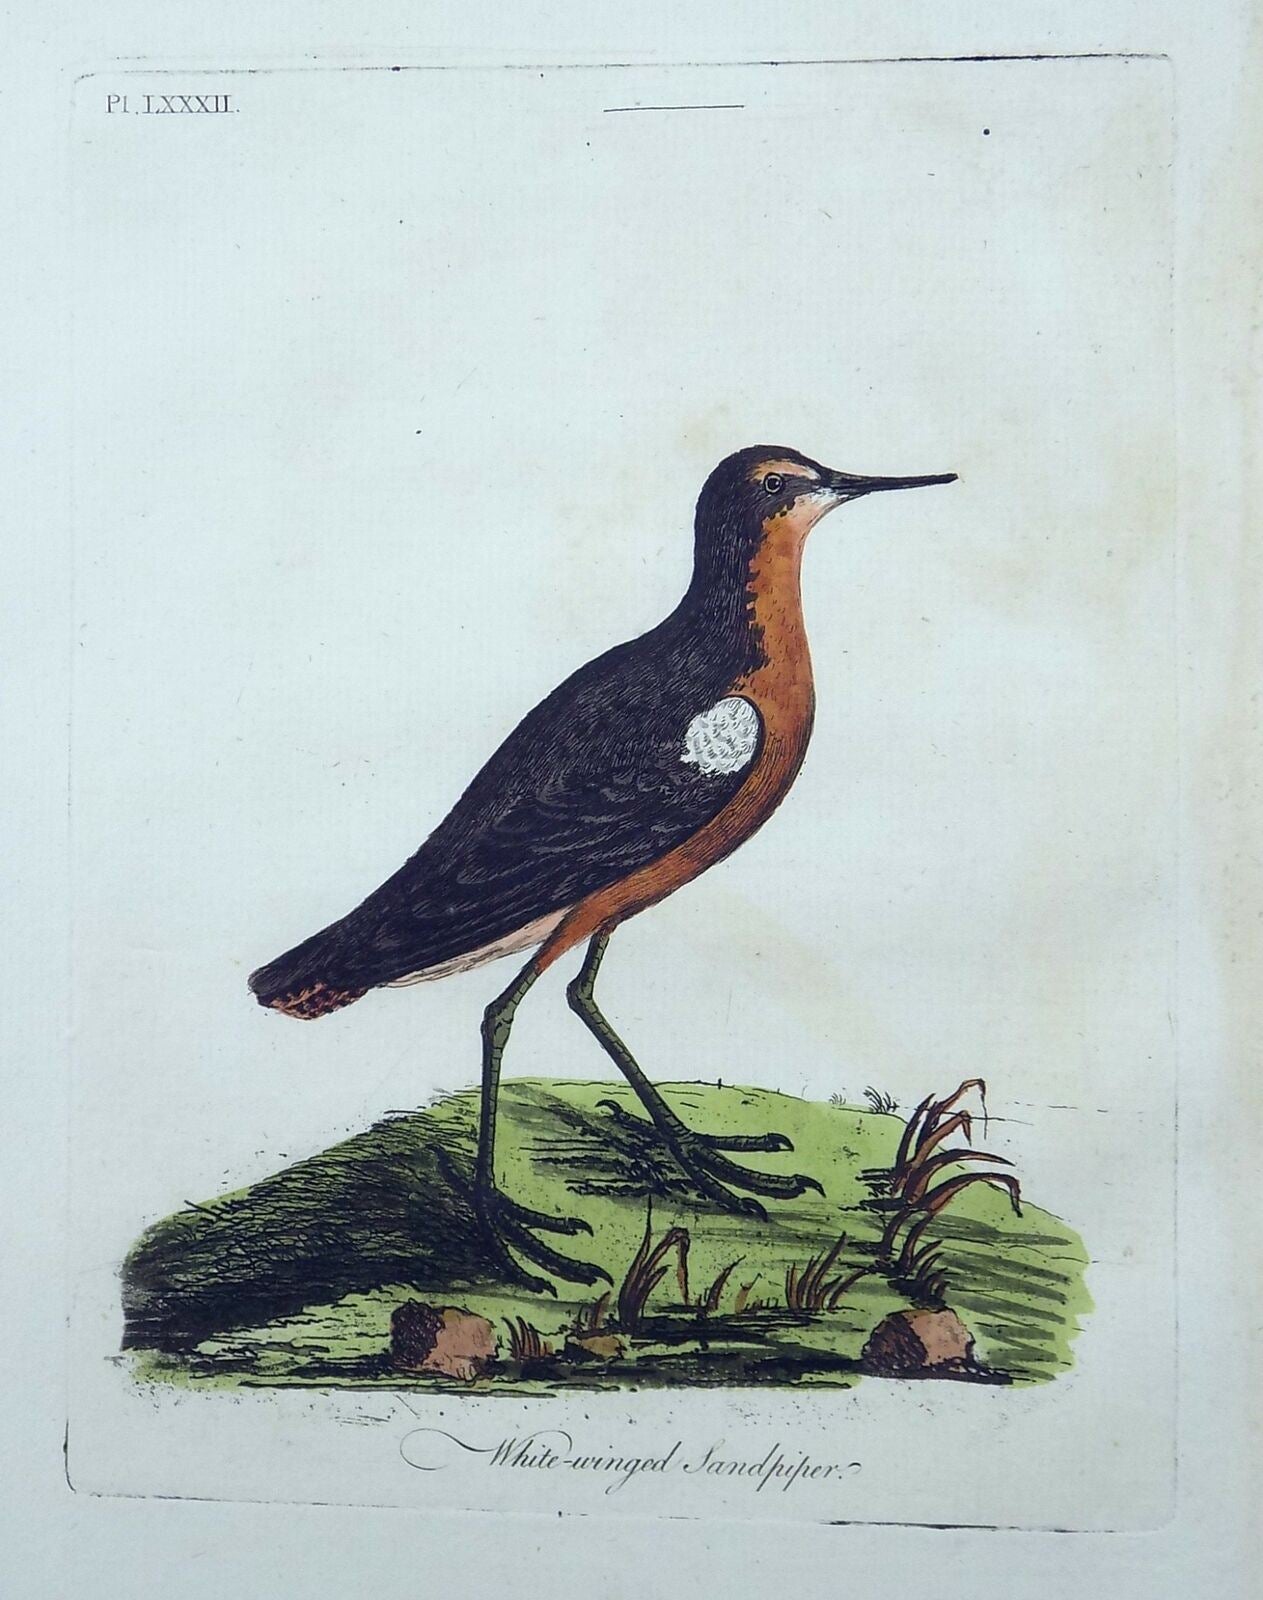 1785 John Latham, Synopsis, Extinct SANDPIPER, hand coloured engraving, ornithology